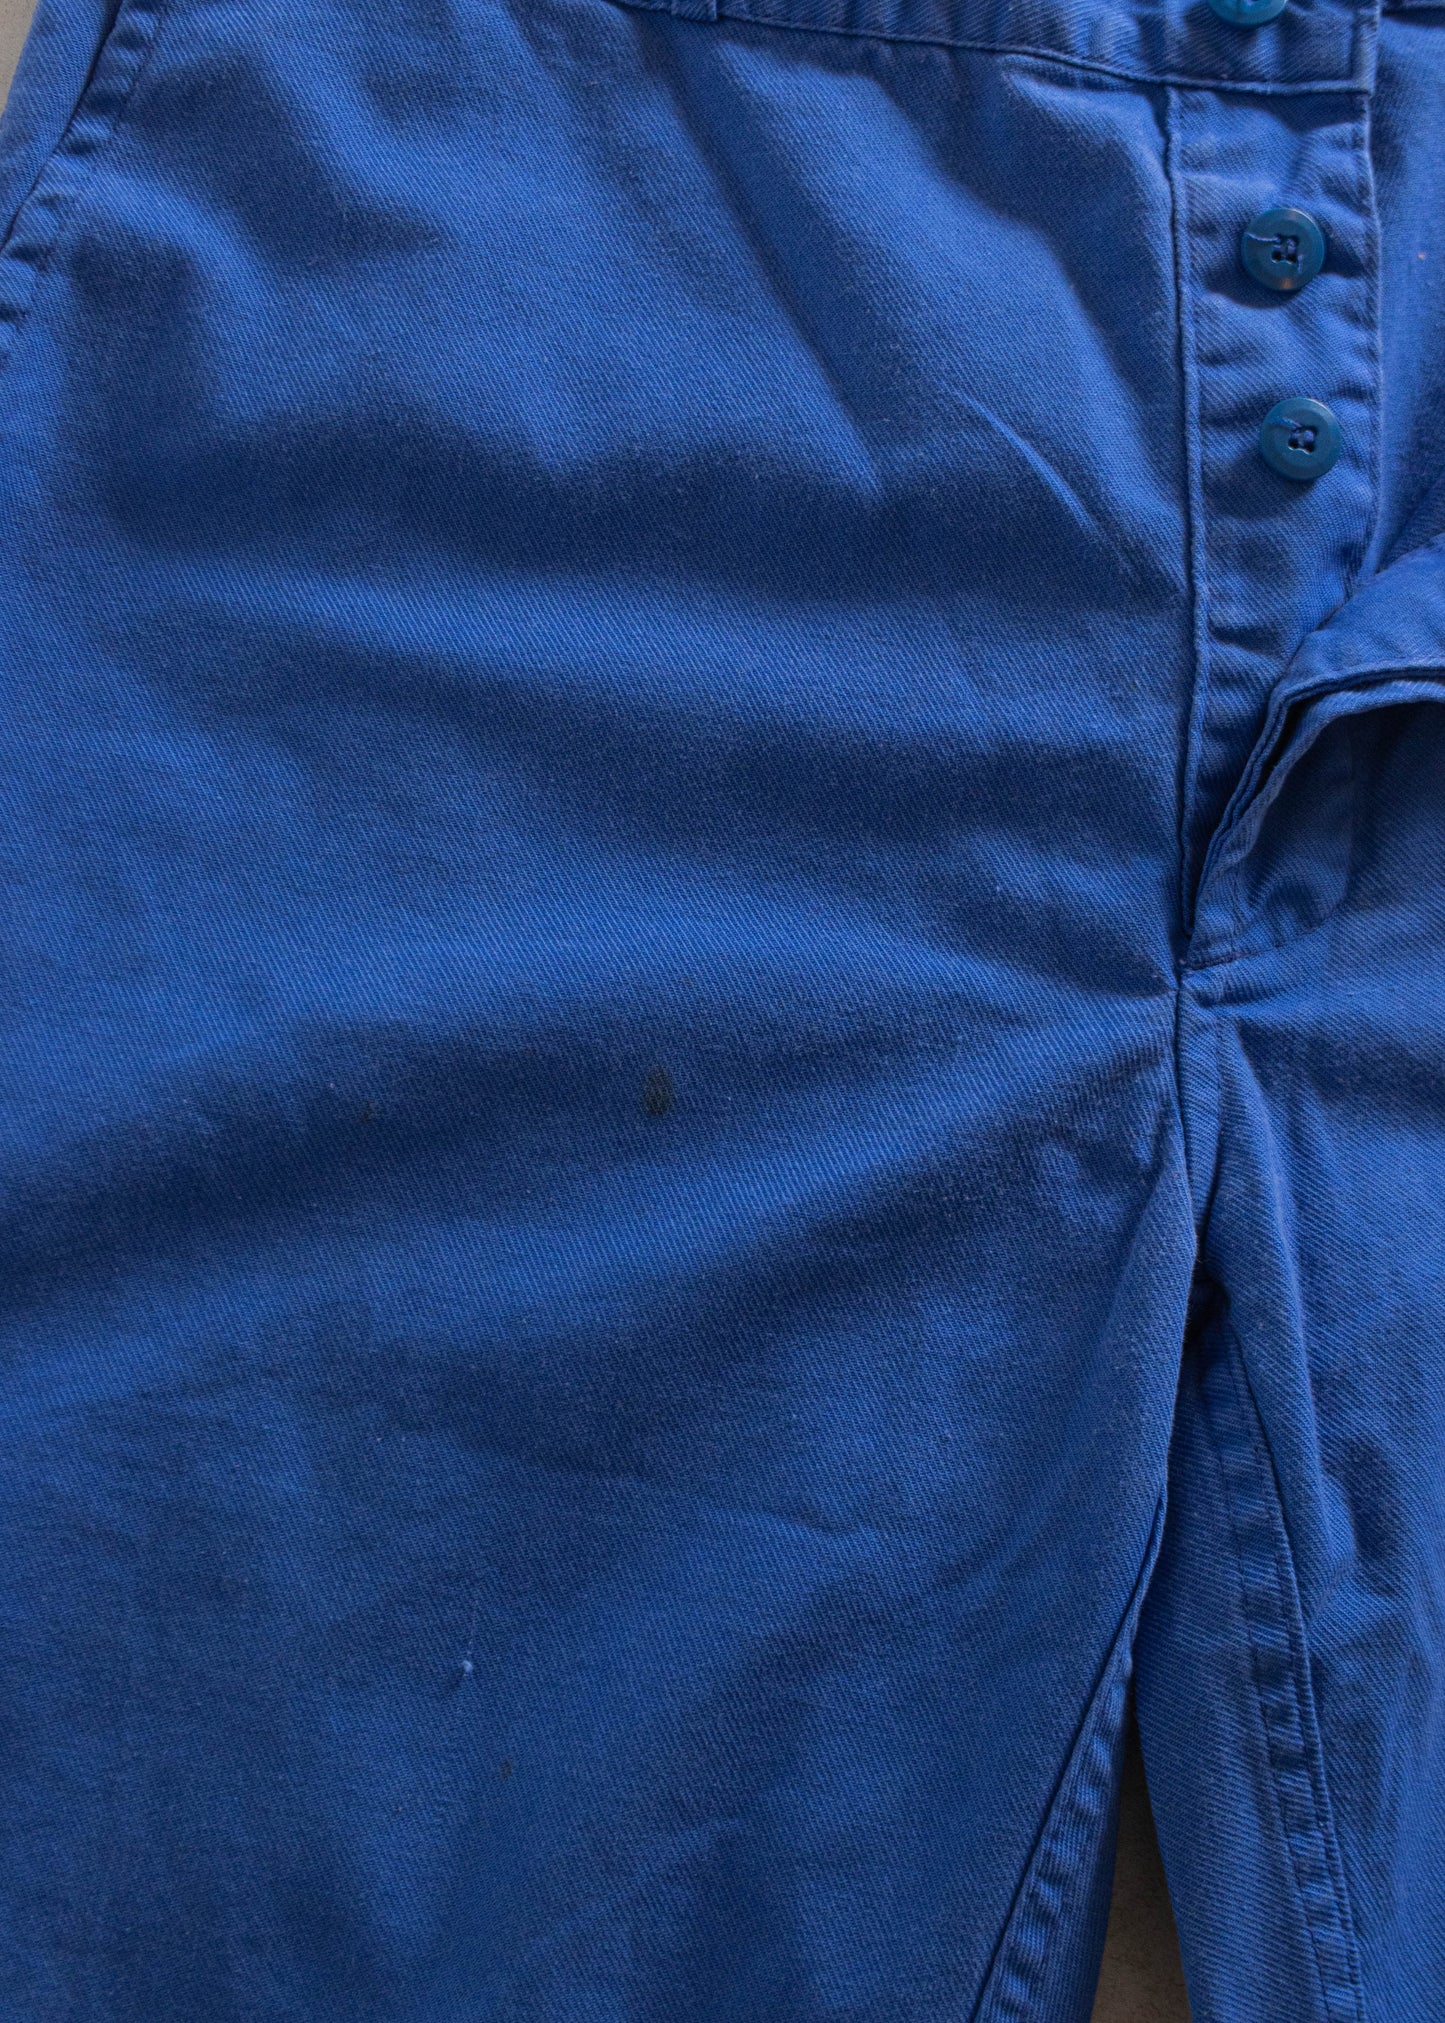 1980s Le Mineur French Workwear Chore Pants Size Women's 34 Men's 36